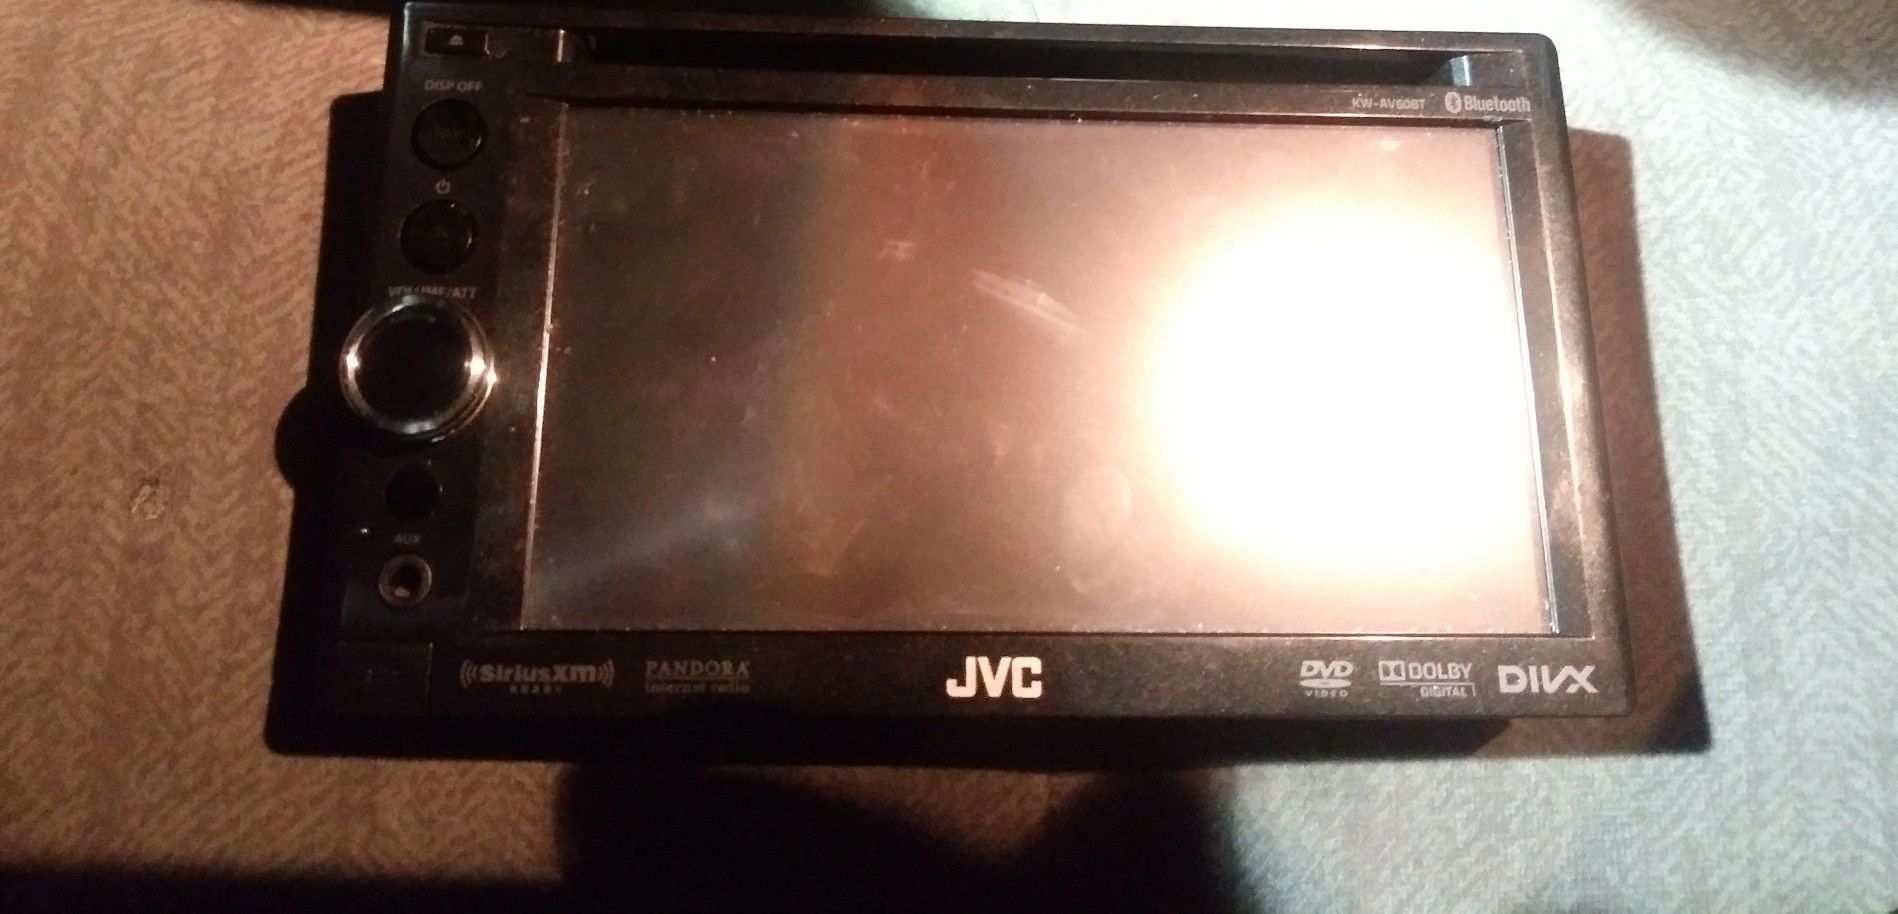 JVC Dvd monitor